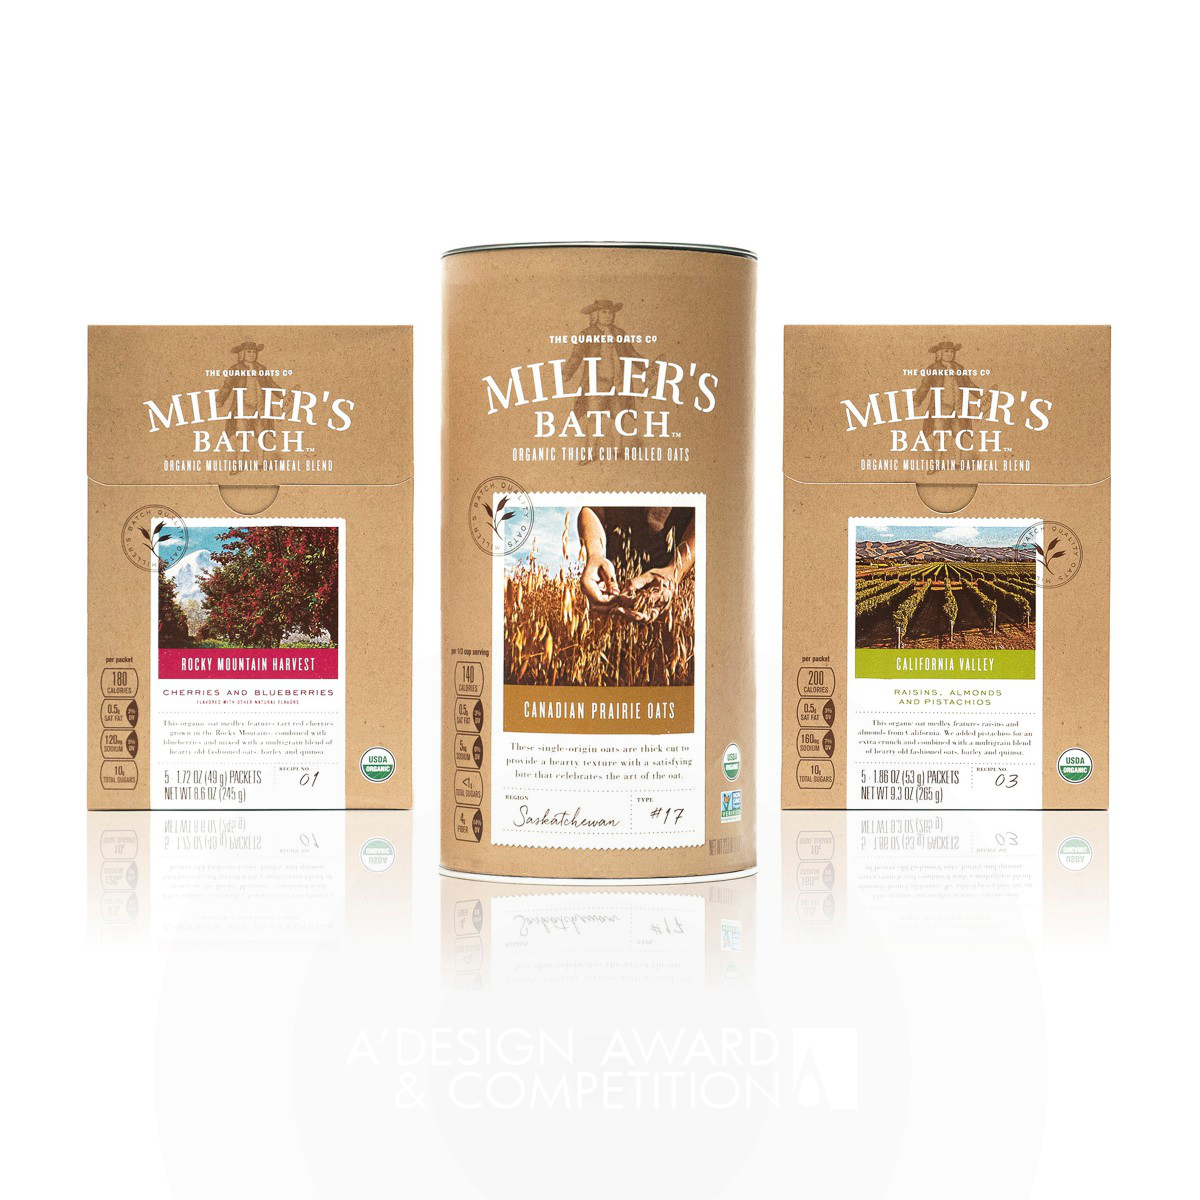 Miller's Batch Brand Packaging by PepsiCo Design & Innovation